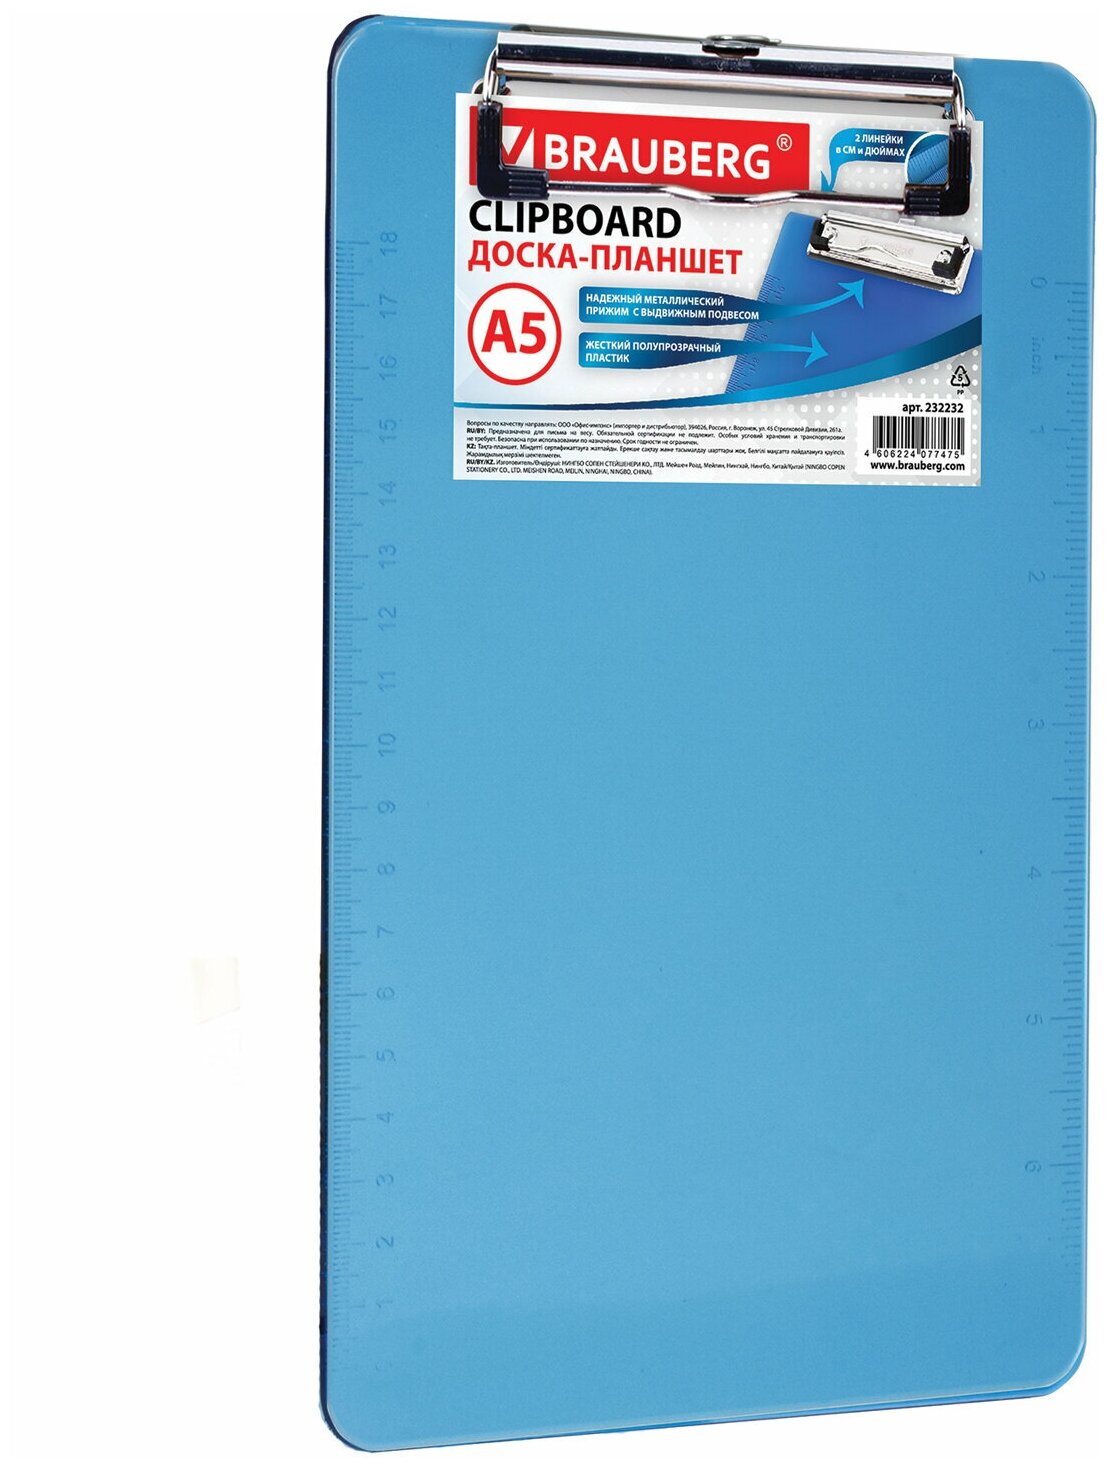 BRAUBERG Доска-планшет малого формата (155х228 мм), а5, brauberg energy с прижимом, пластик, 2 мм, синяя, 232232